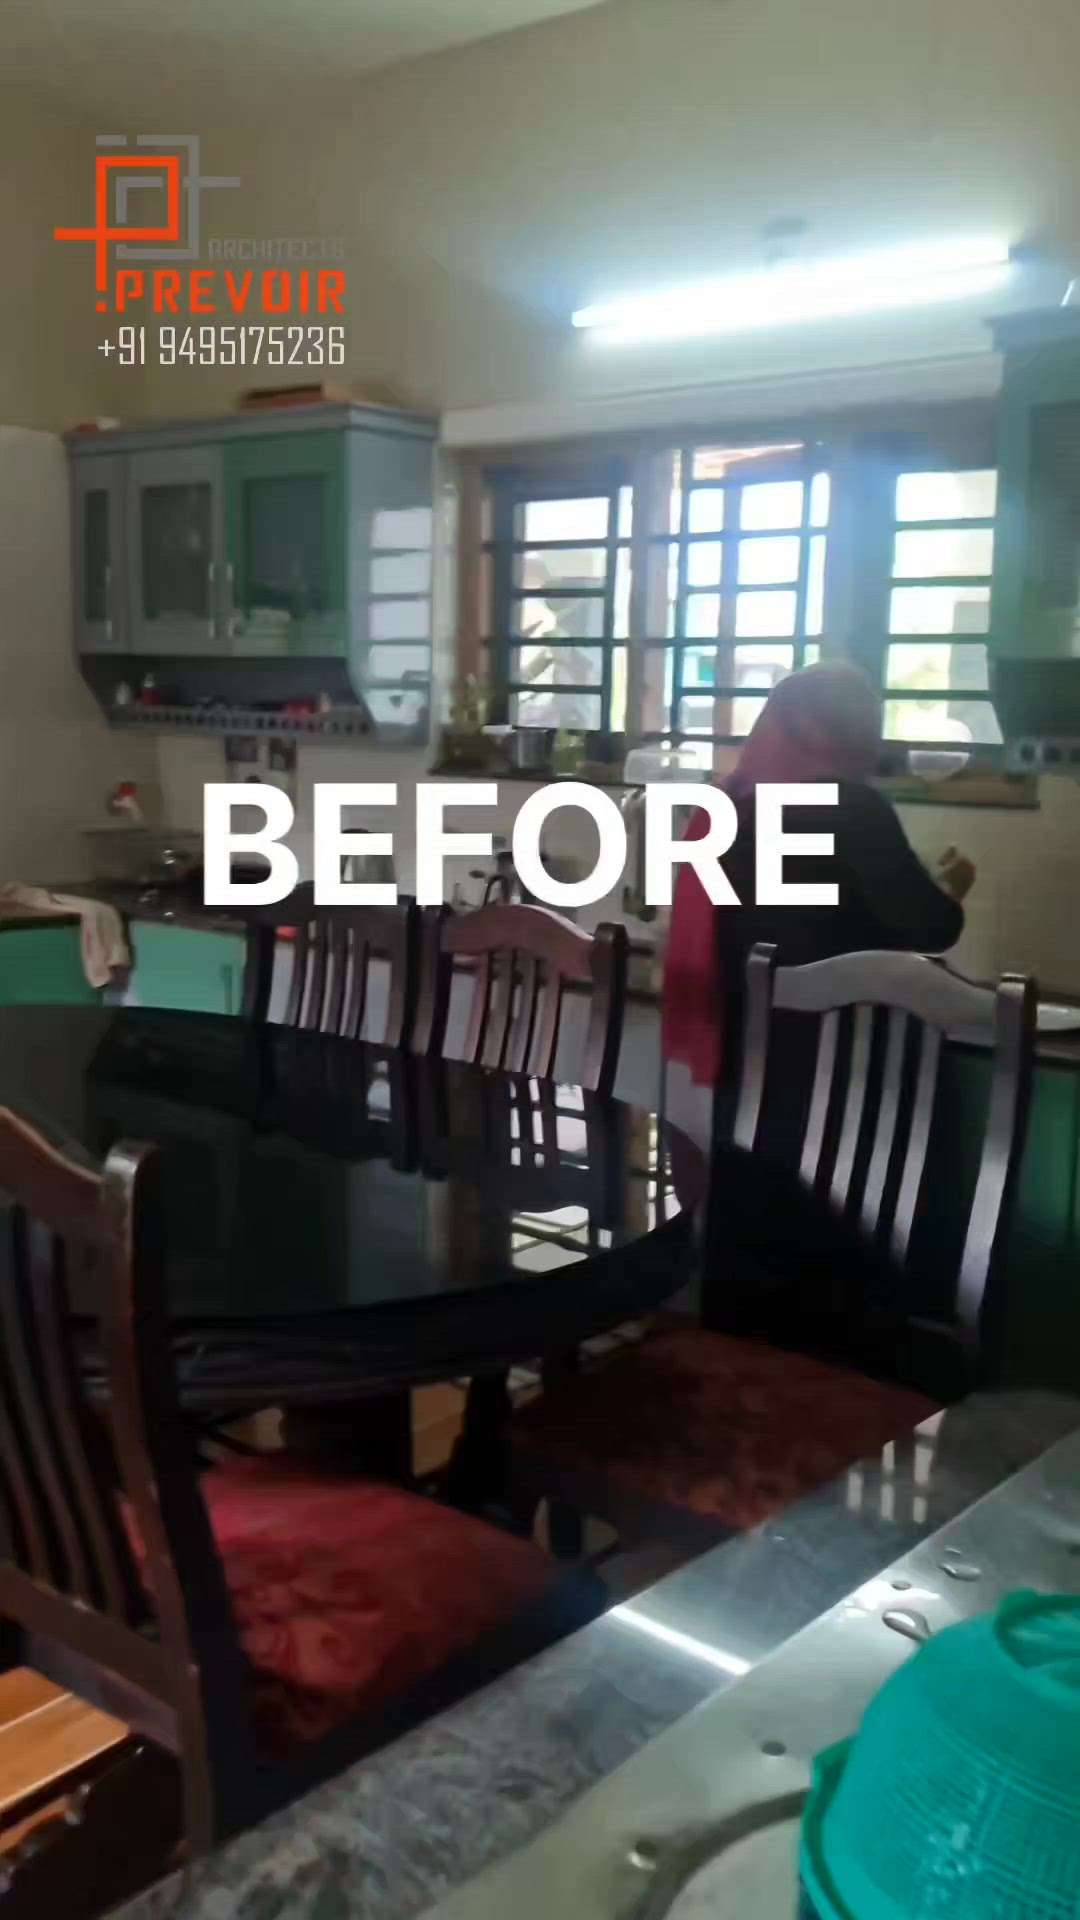 RENOVATION BEFORE AND AFTER
Home Renovation 
#creatorsofkolo #renovation #beforeandafter #home #new #changes #tips #ModularKitchen #KitchenRenovation #KeralaStyleHouse